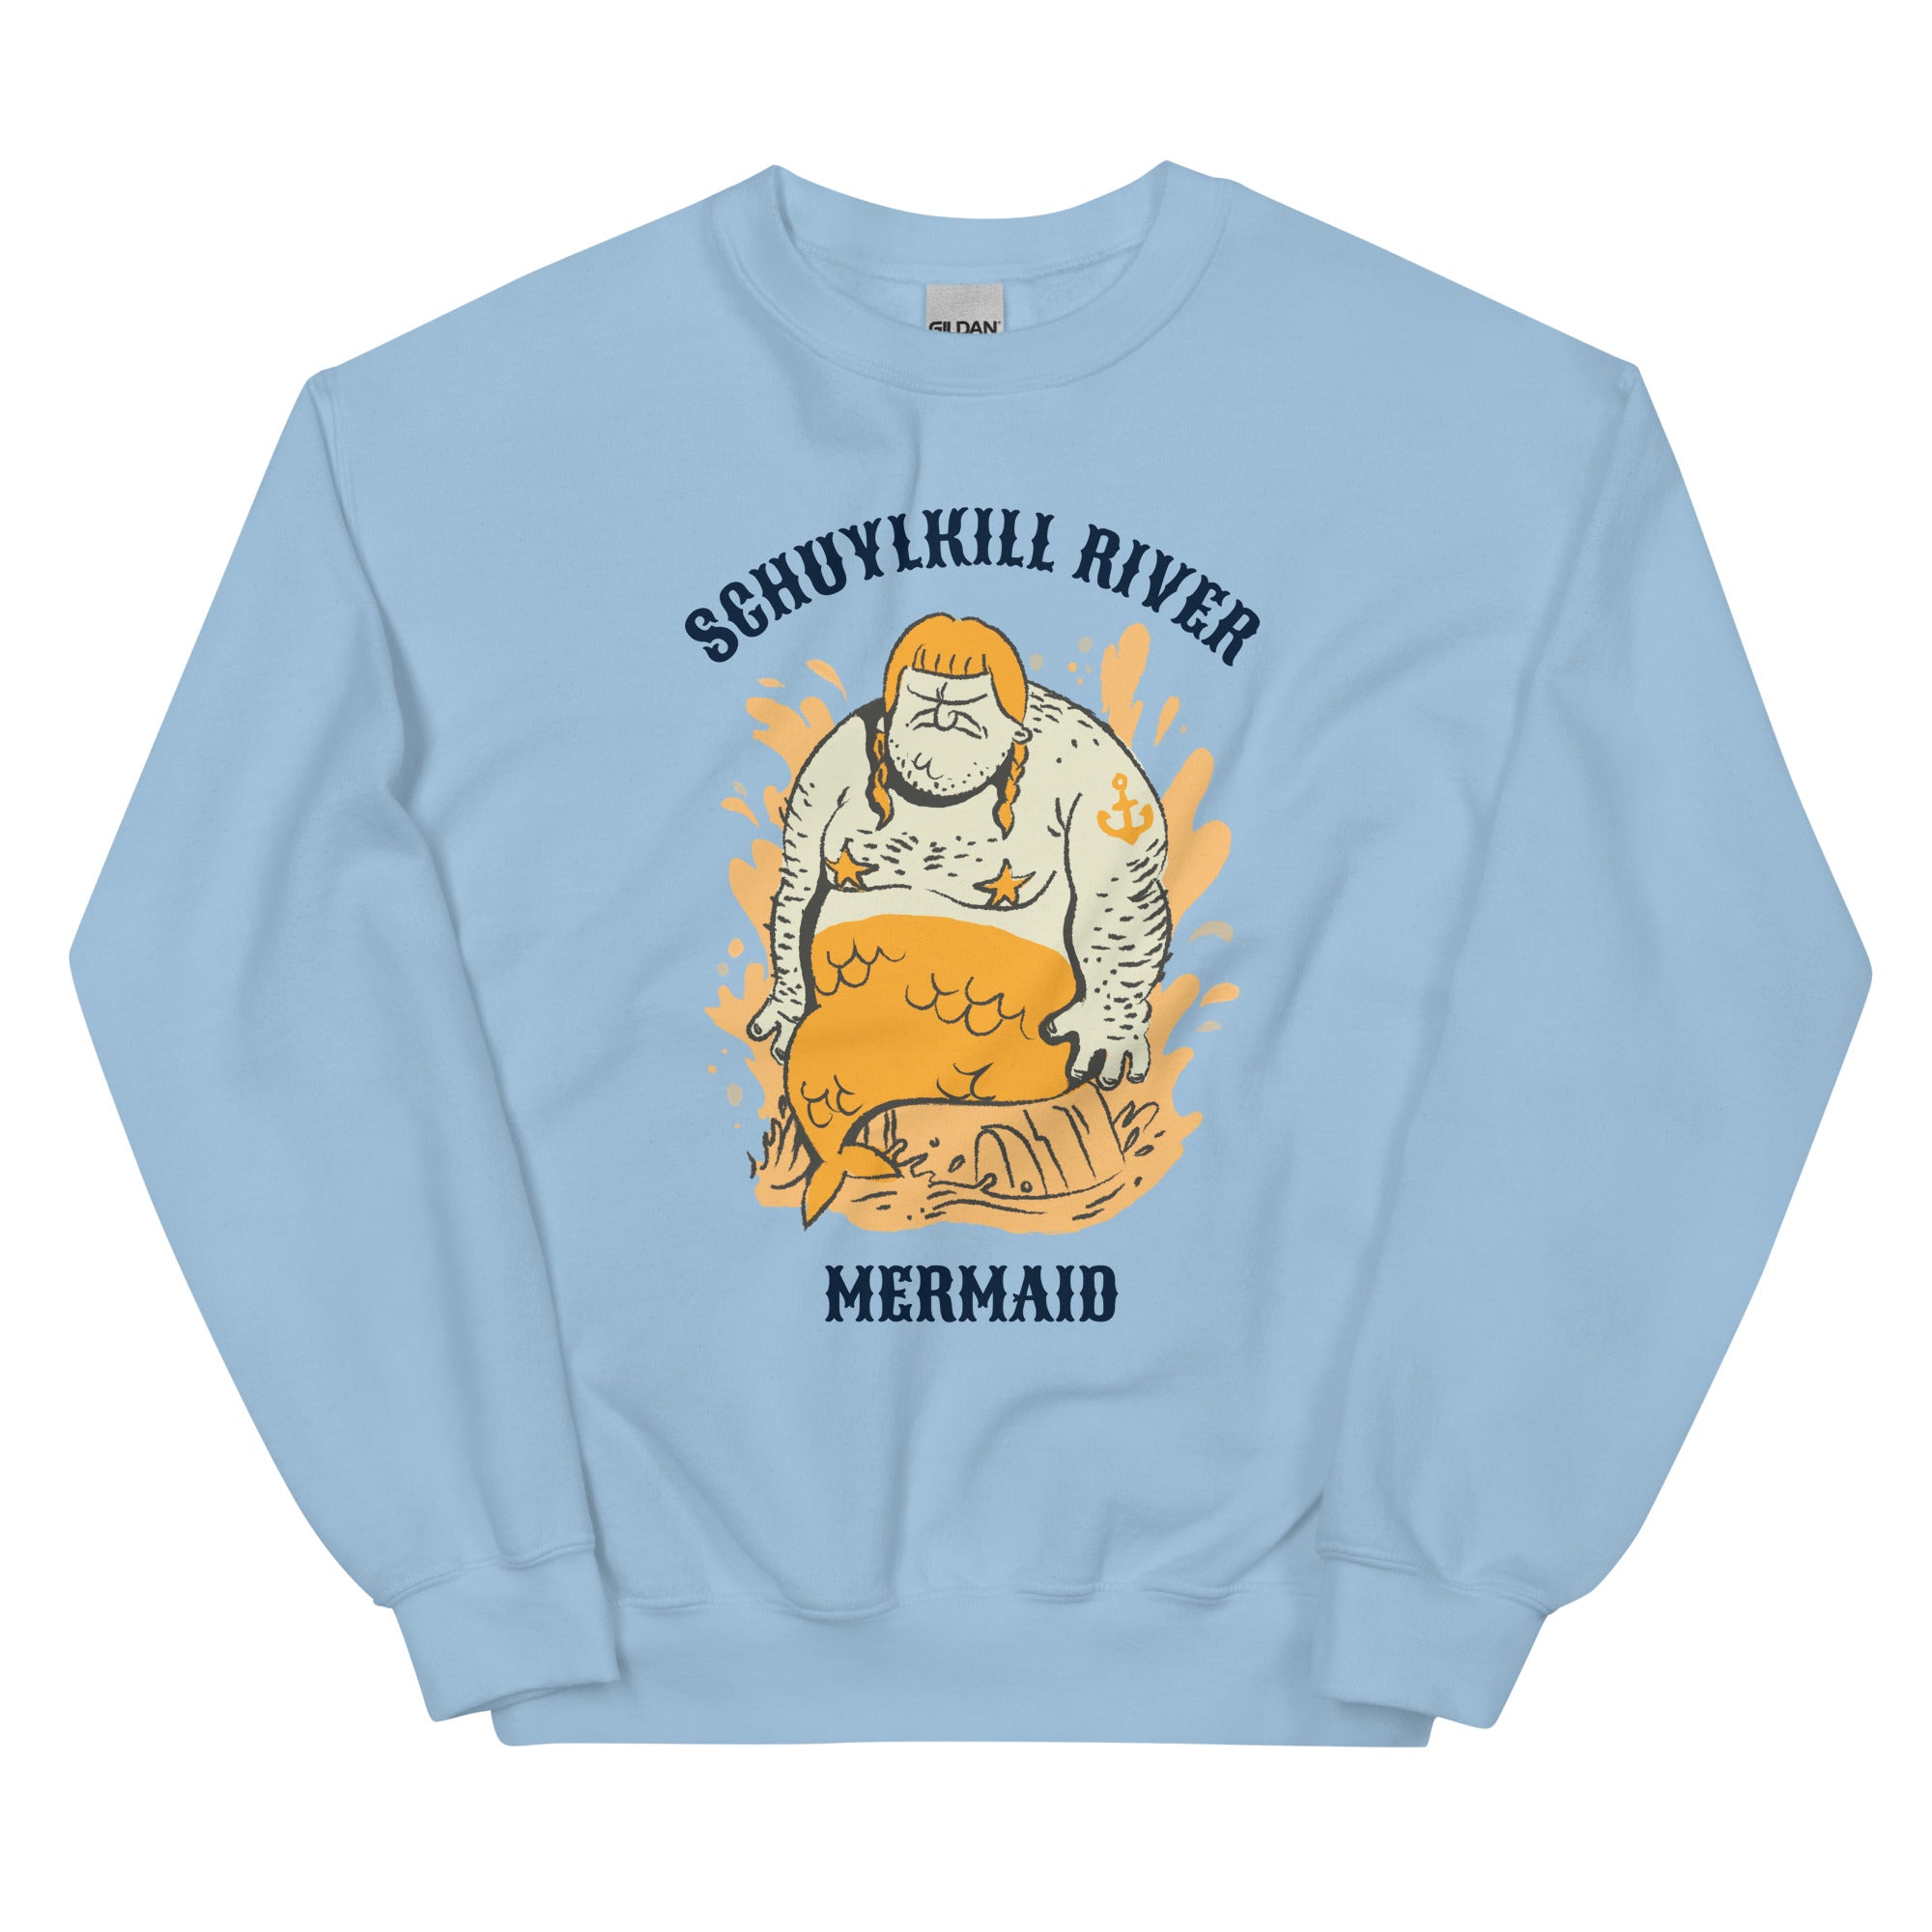 Funny Philadelphia Schuylkill River Mermaid light blue sweatshirt from Phillygoat